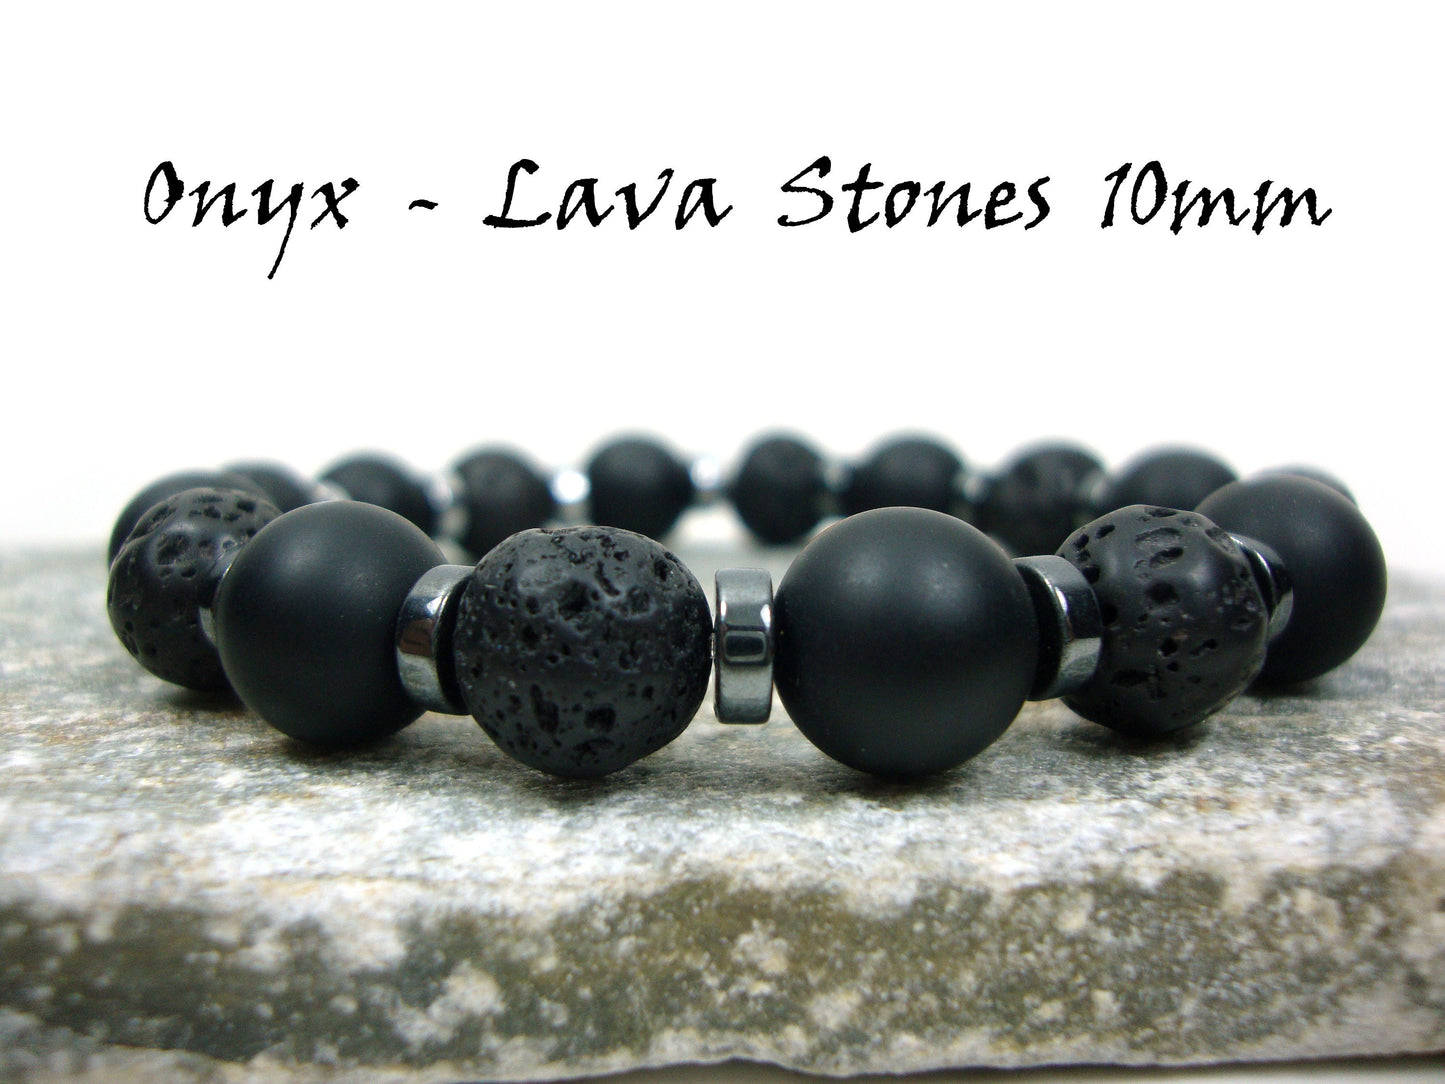 Natural Volacanic Santorini Greek Black Lava Stones, Black Matt Onyx Stones 10mm, Hematite Silver Color Stones Bracelet, Lava Bracelet